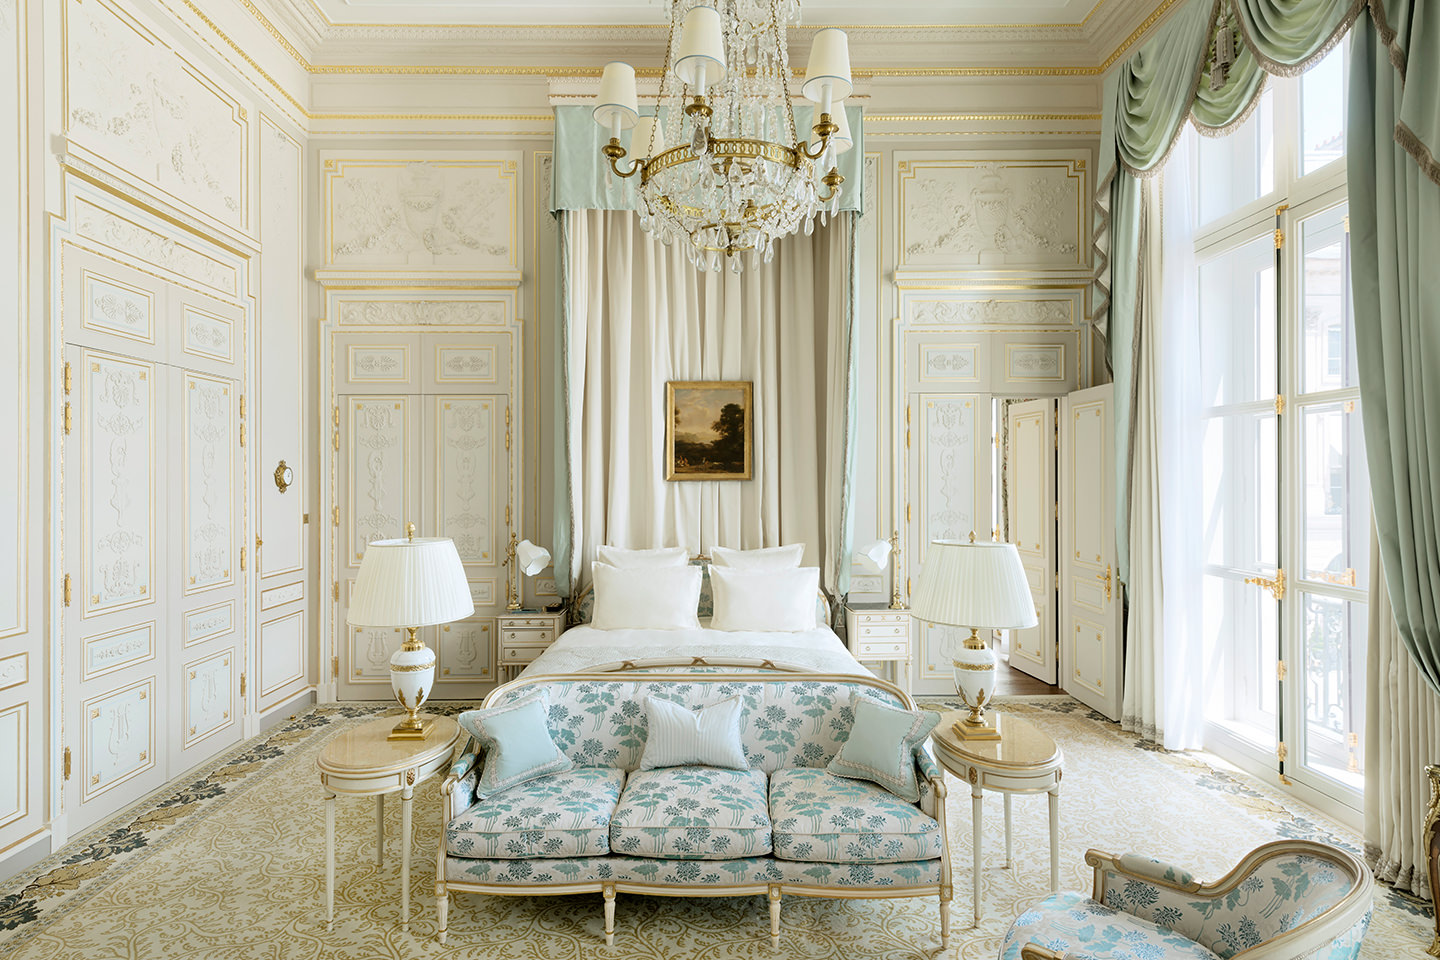 Фото спальня во французском стиле фото